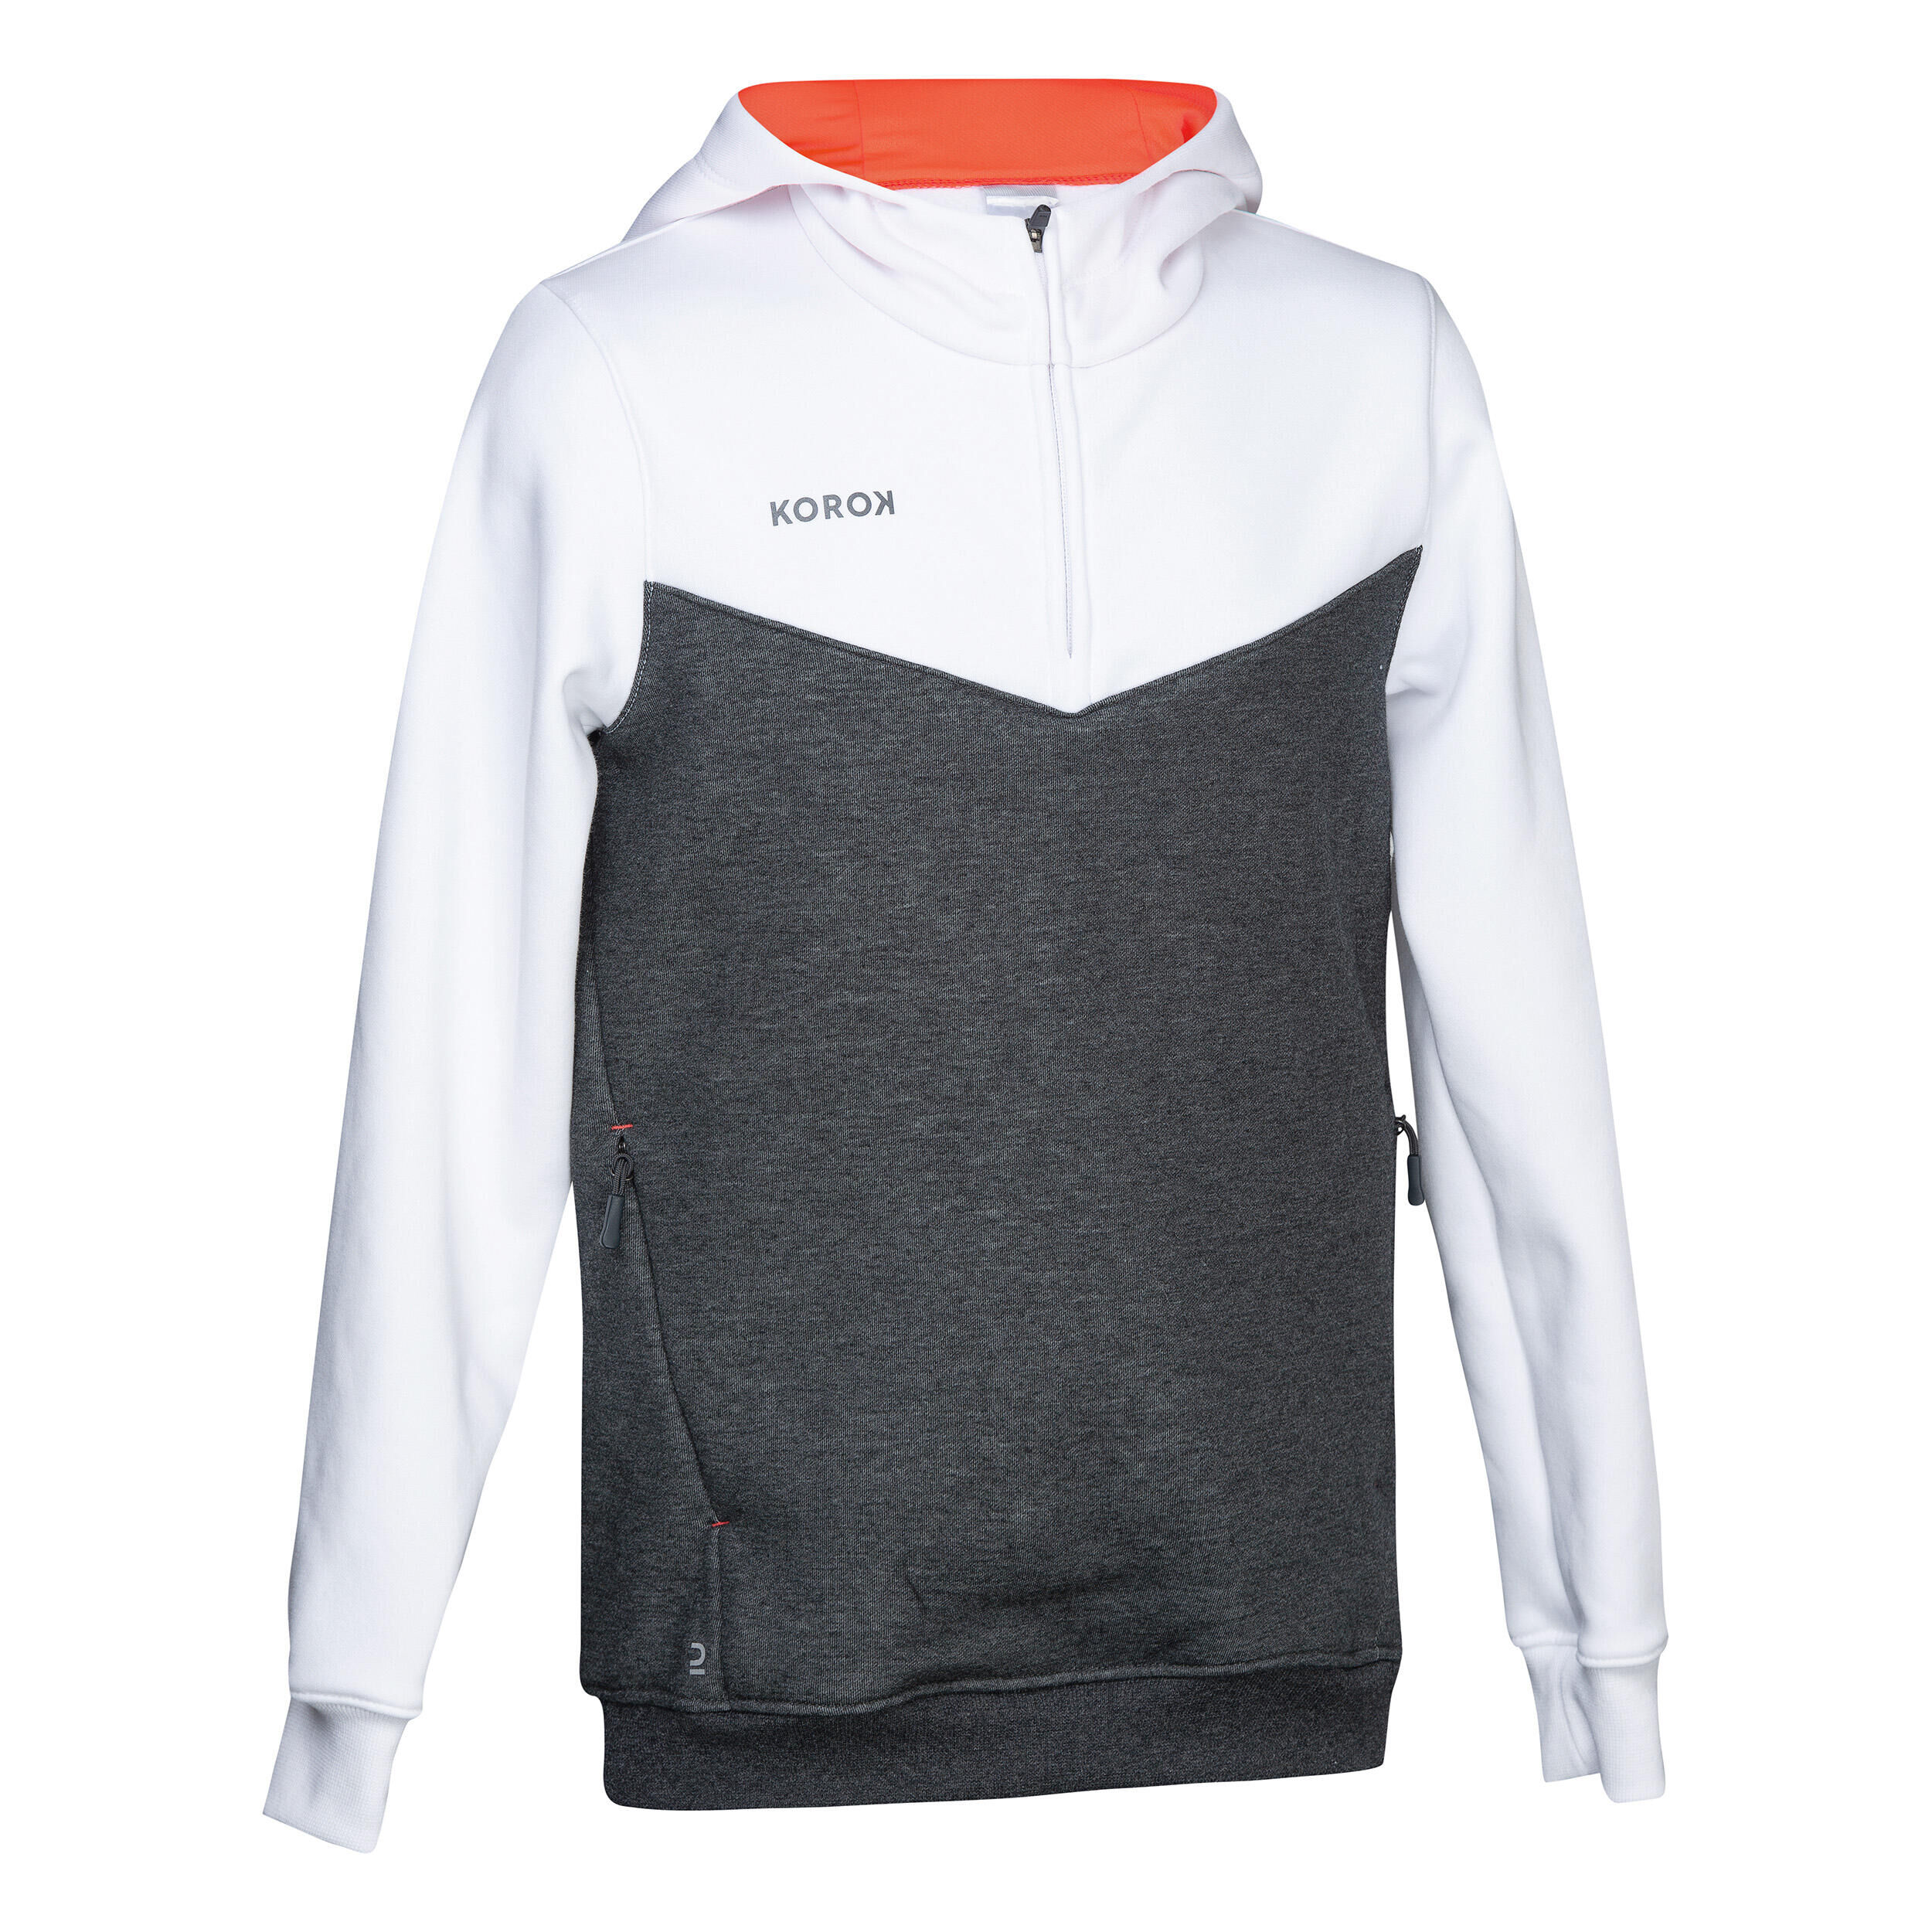 KOROK Girls' Field Hockey Sweatshirt FH500 - White/Grey/Pink